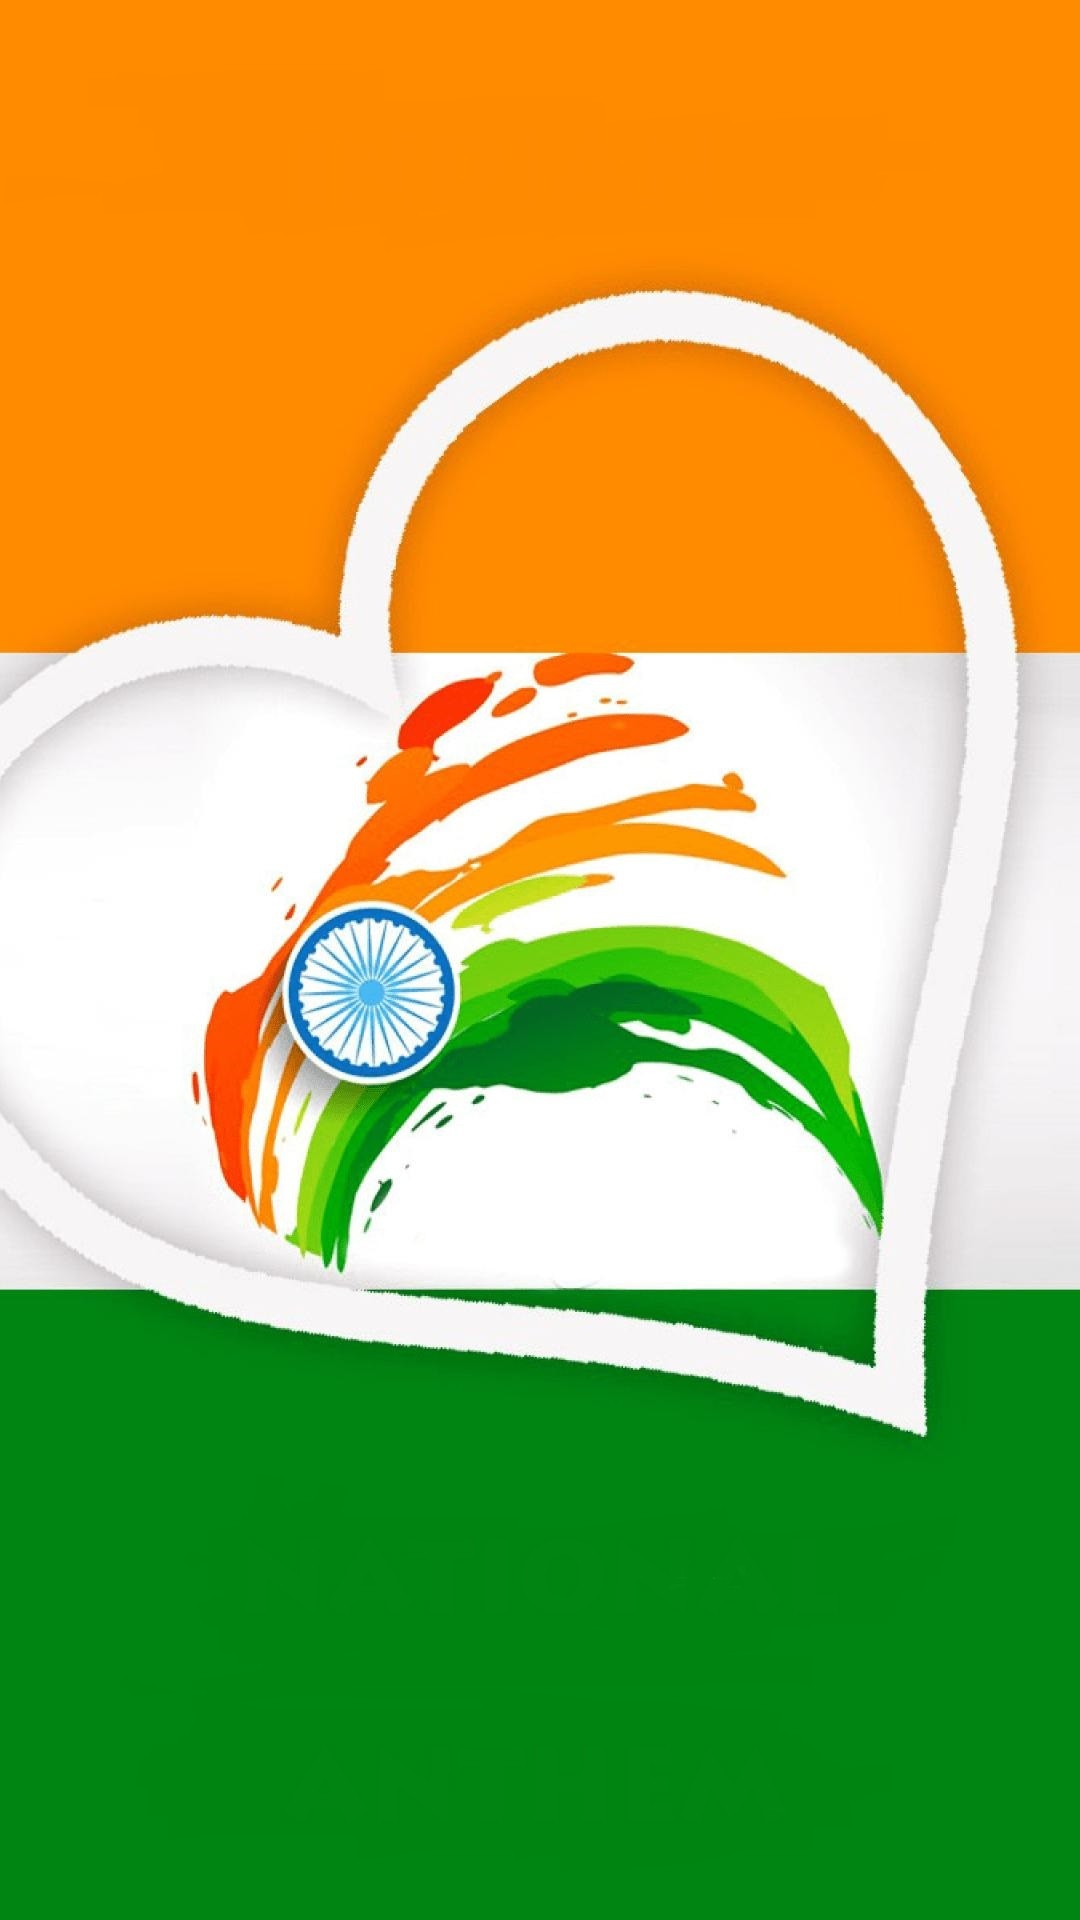 Stylish Indian Flag - heart design flag